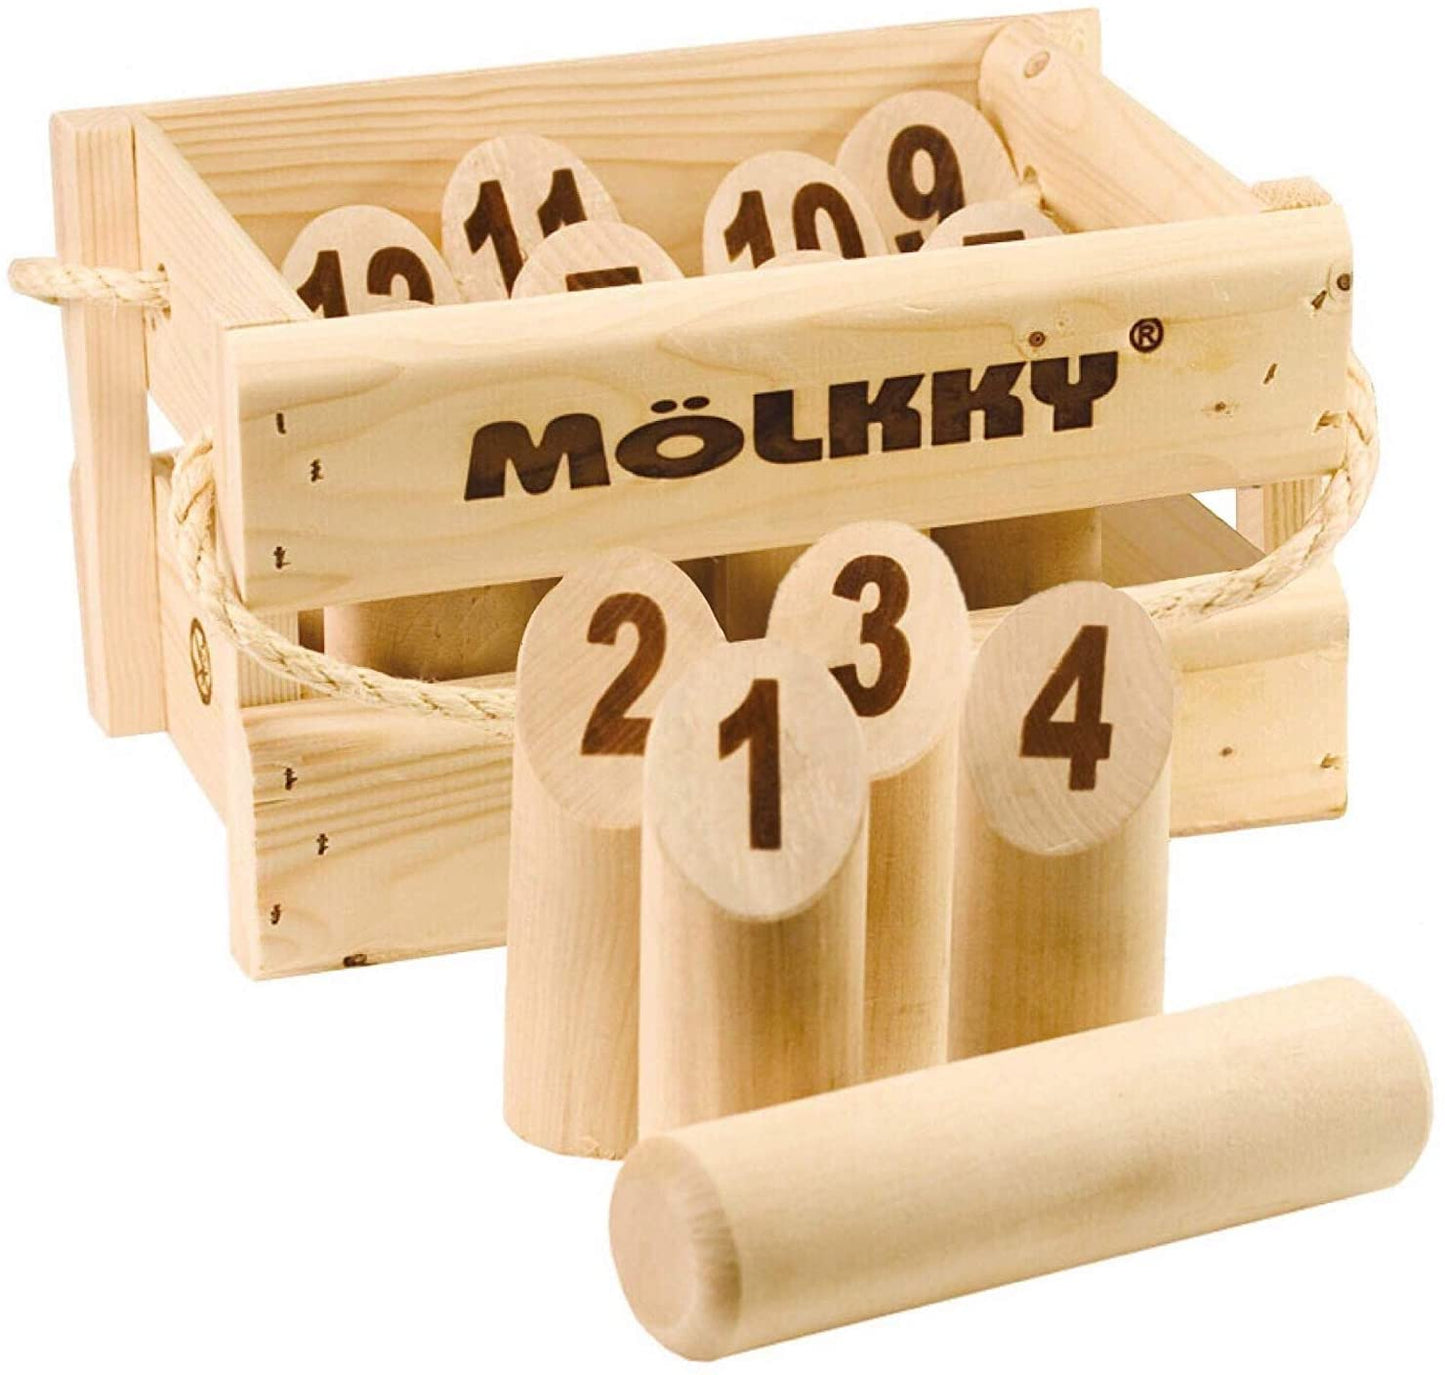 [Popular emerging sport of throwing] Finnish wooden post (wooden chess) MOLKKY wooden box set 